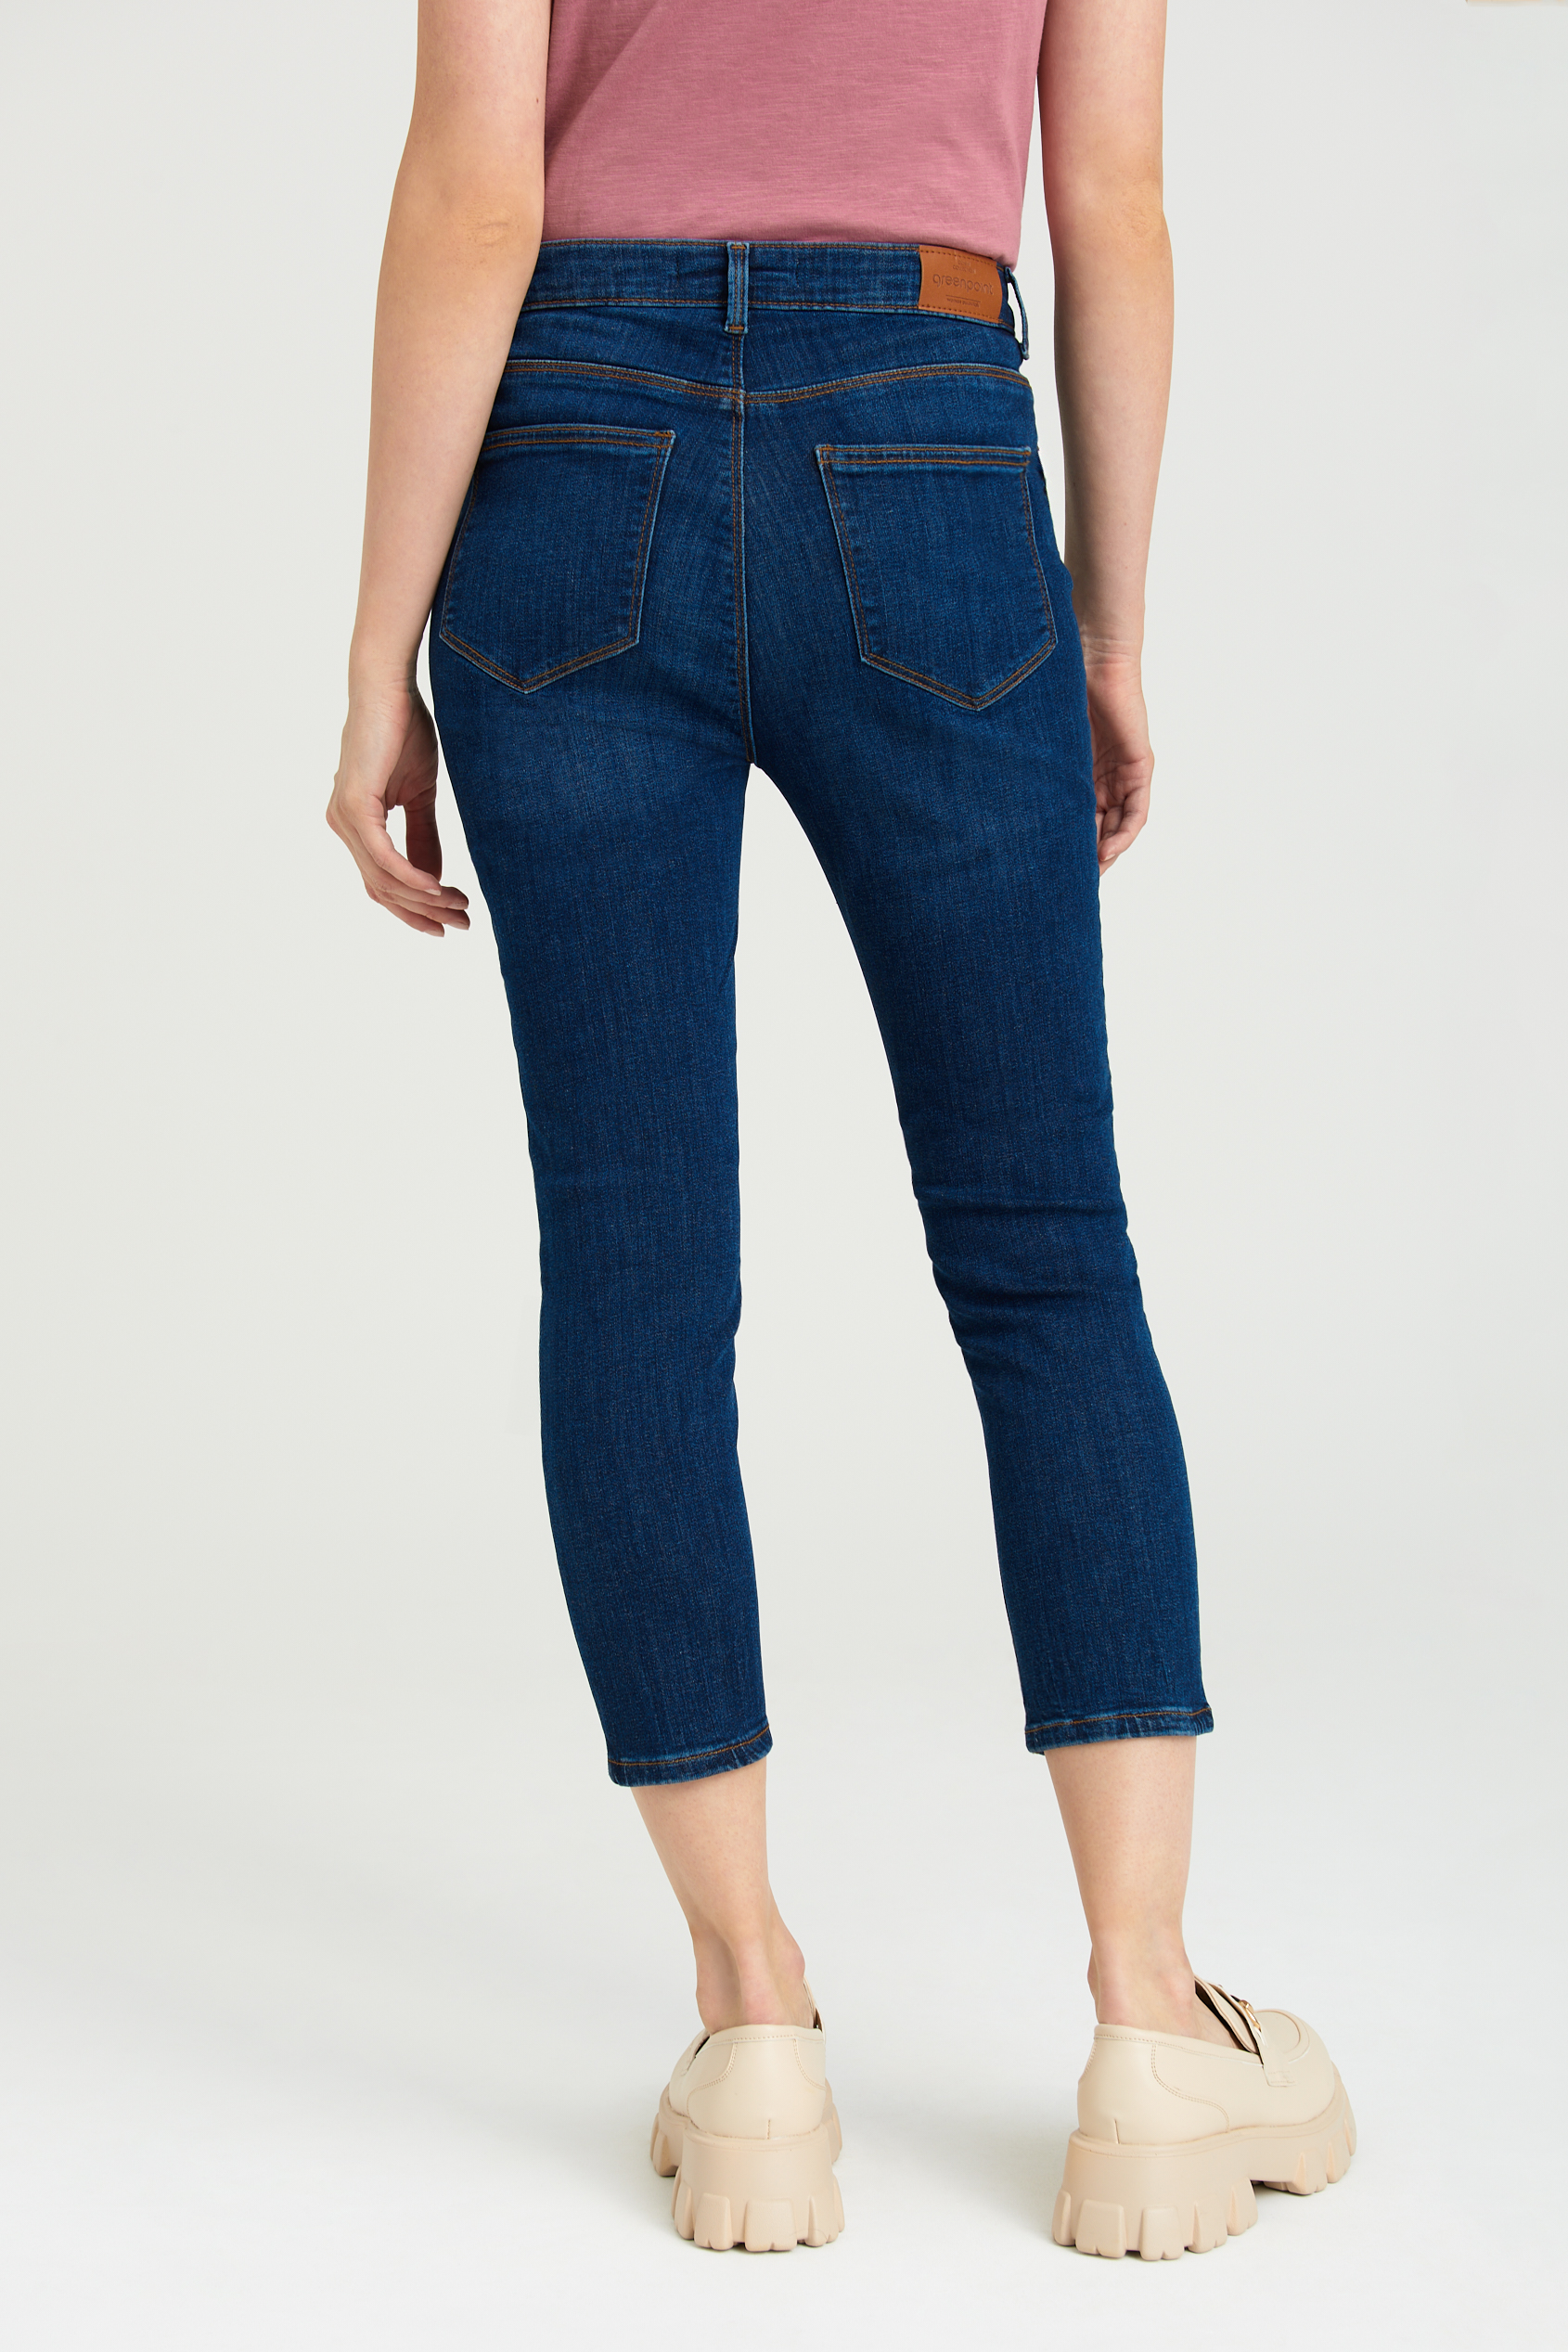 Ciemnogranatowe jeansy, fason skinny-cropped